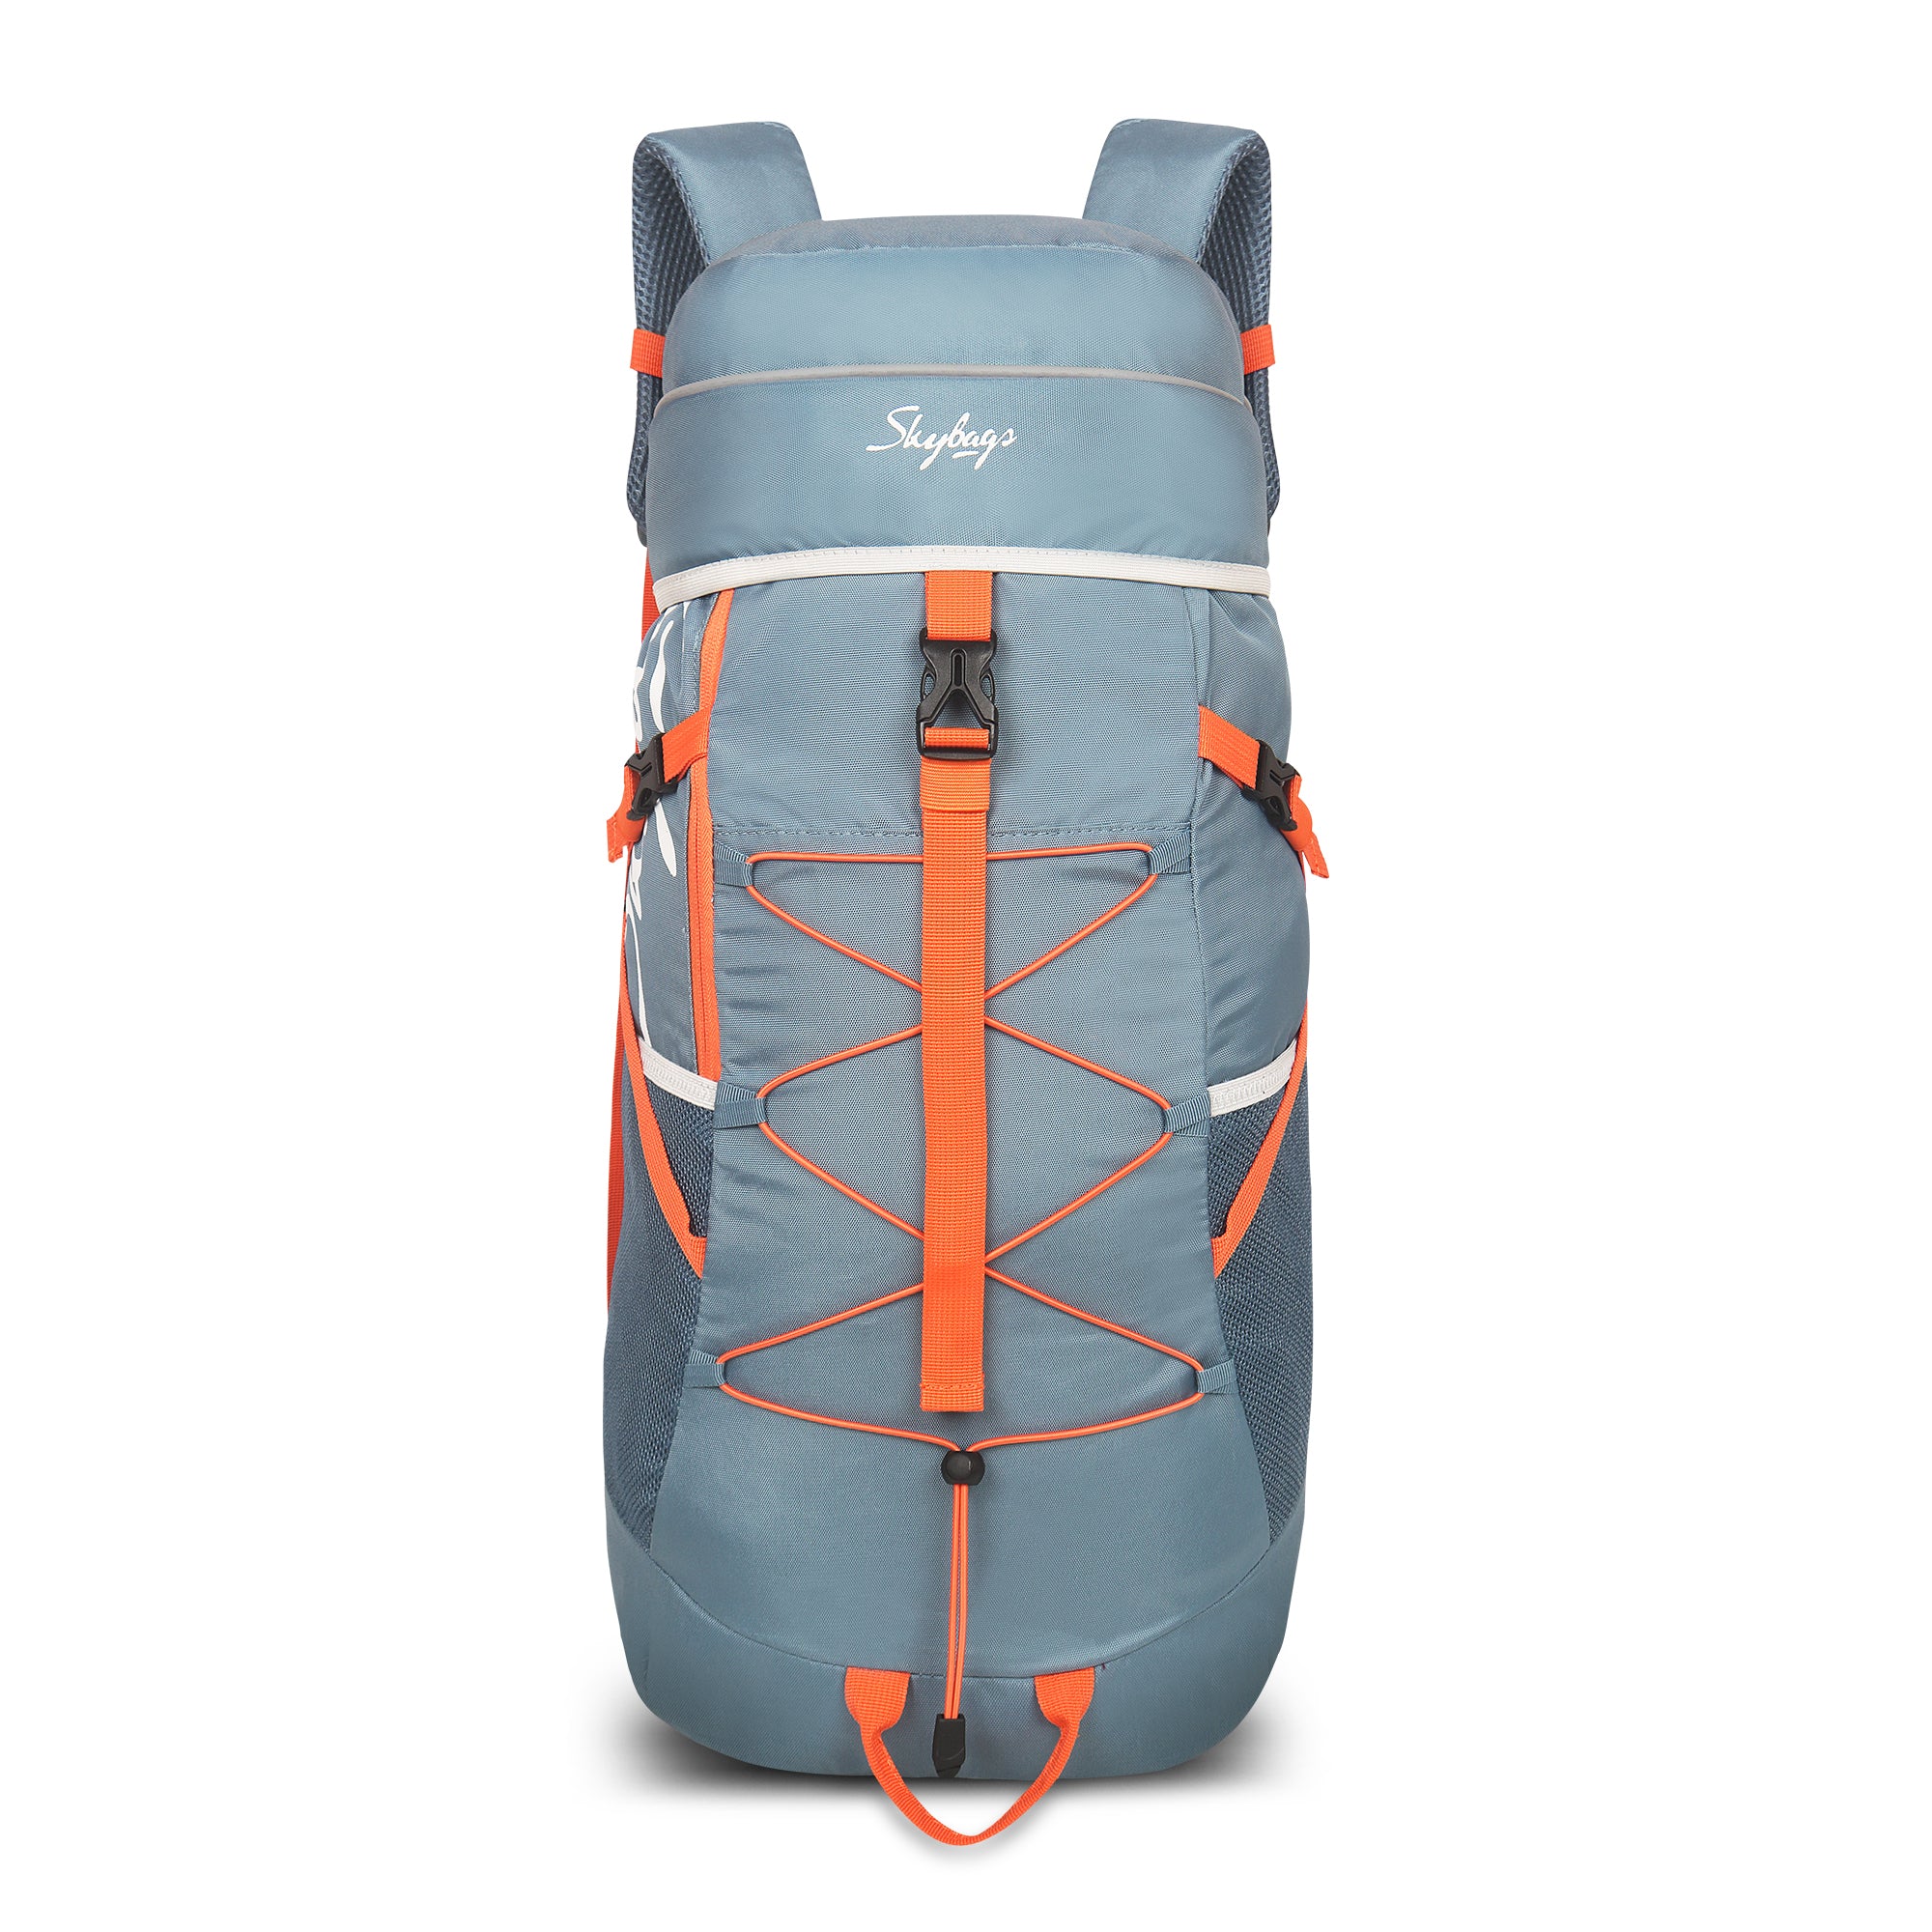 Skybags Crest Rucksuck 45L Backpack With Mesh Bottle Pocket